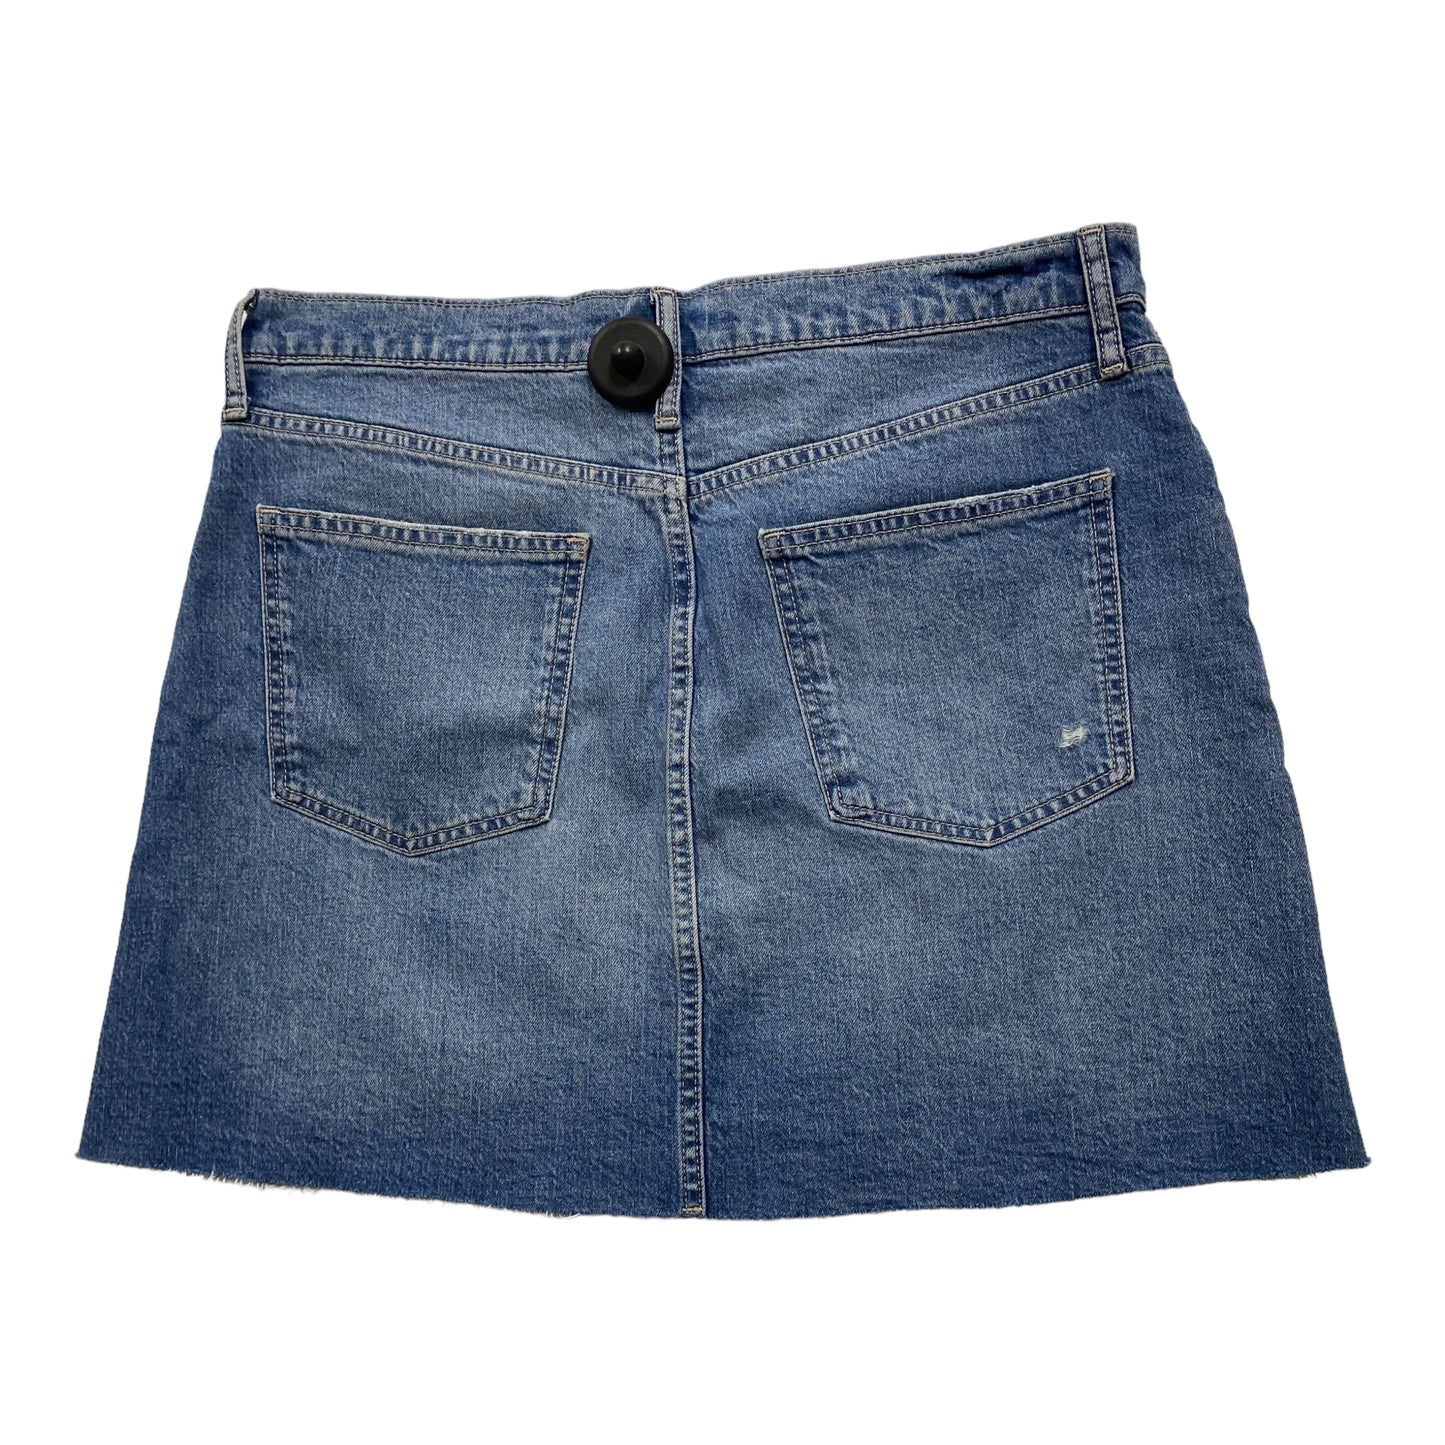 Skirt Mini & Short By Gap  Size: 14